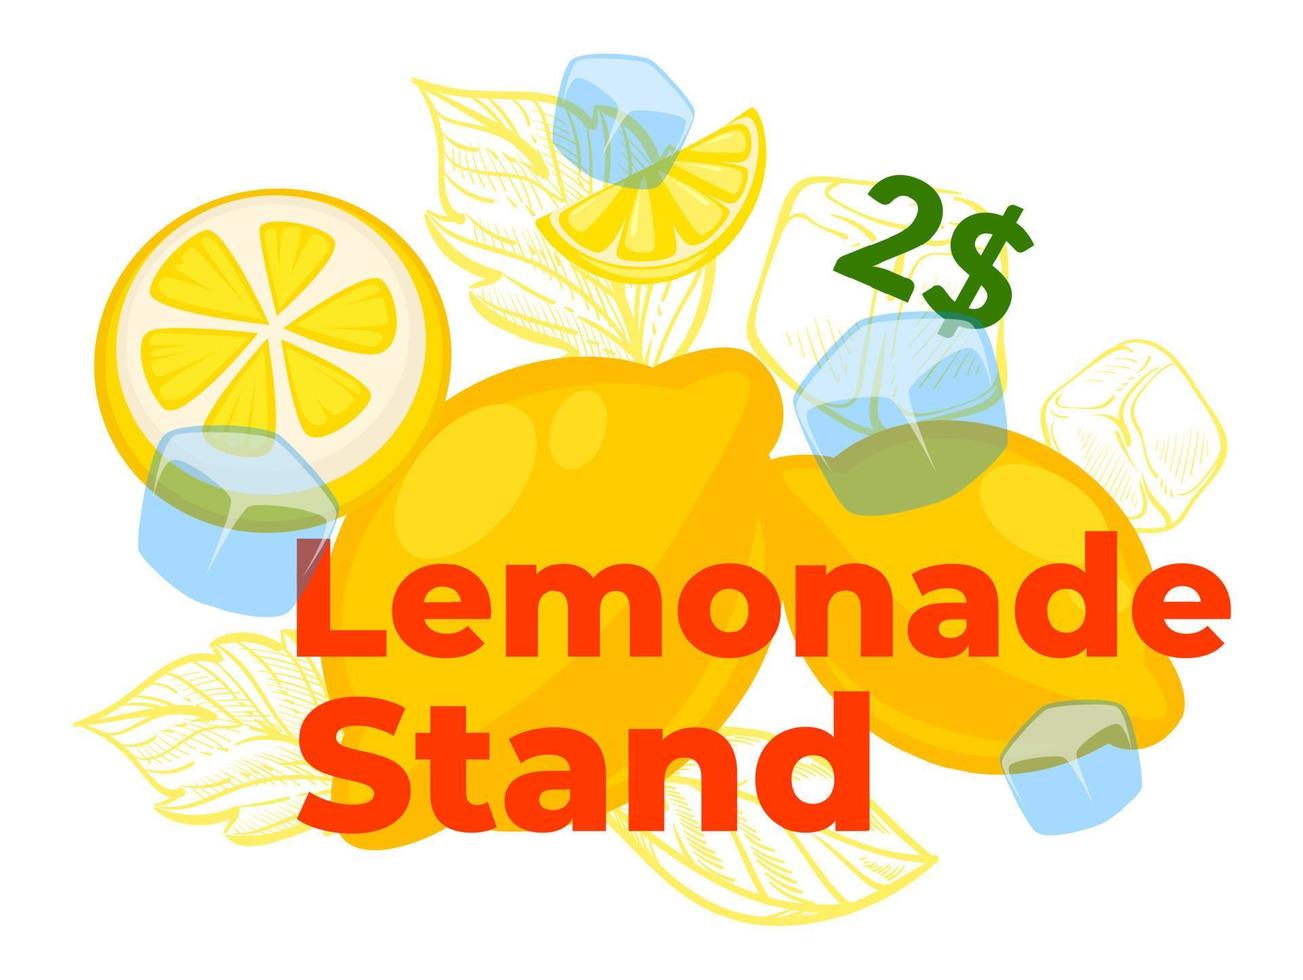 limonade stellage, verkoop koel drank voor 2 dollar vector